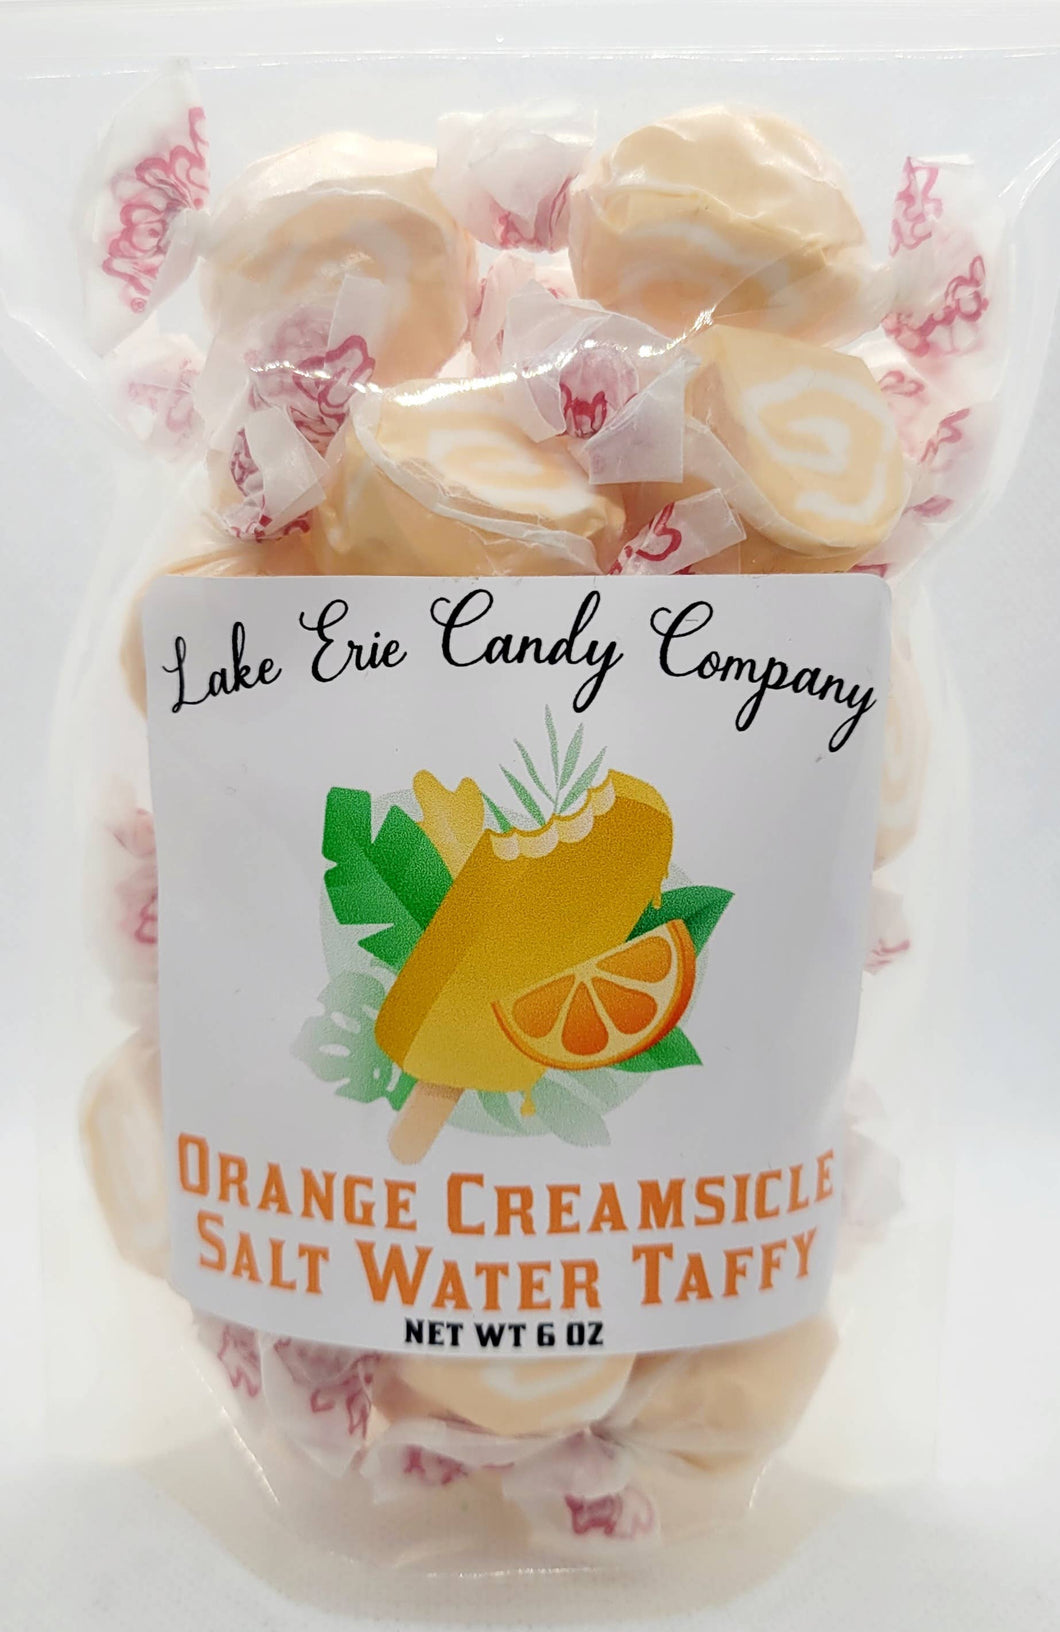 Lake Erie Candy Company - Orange Creamsicle Salt Water Taffy